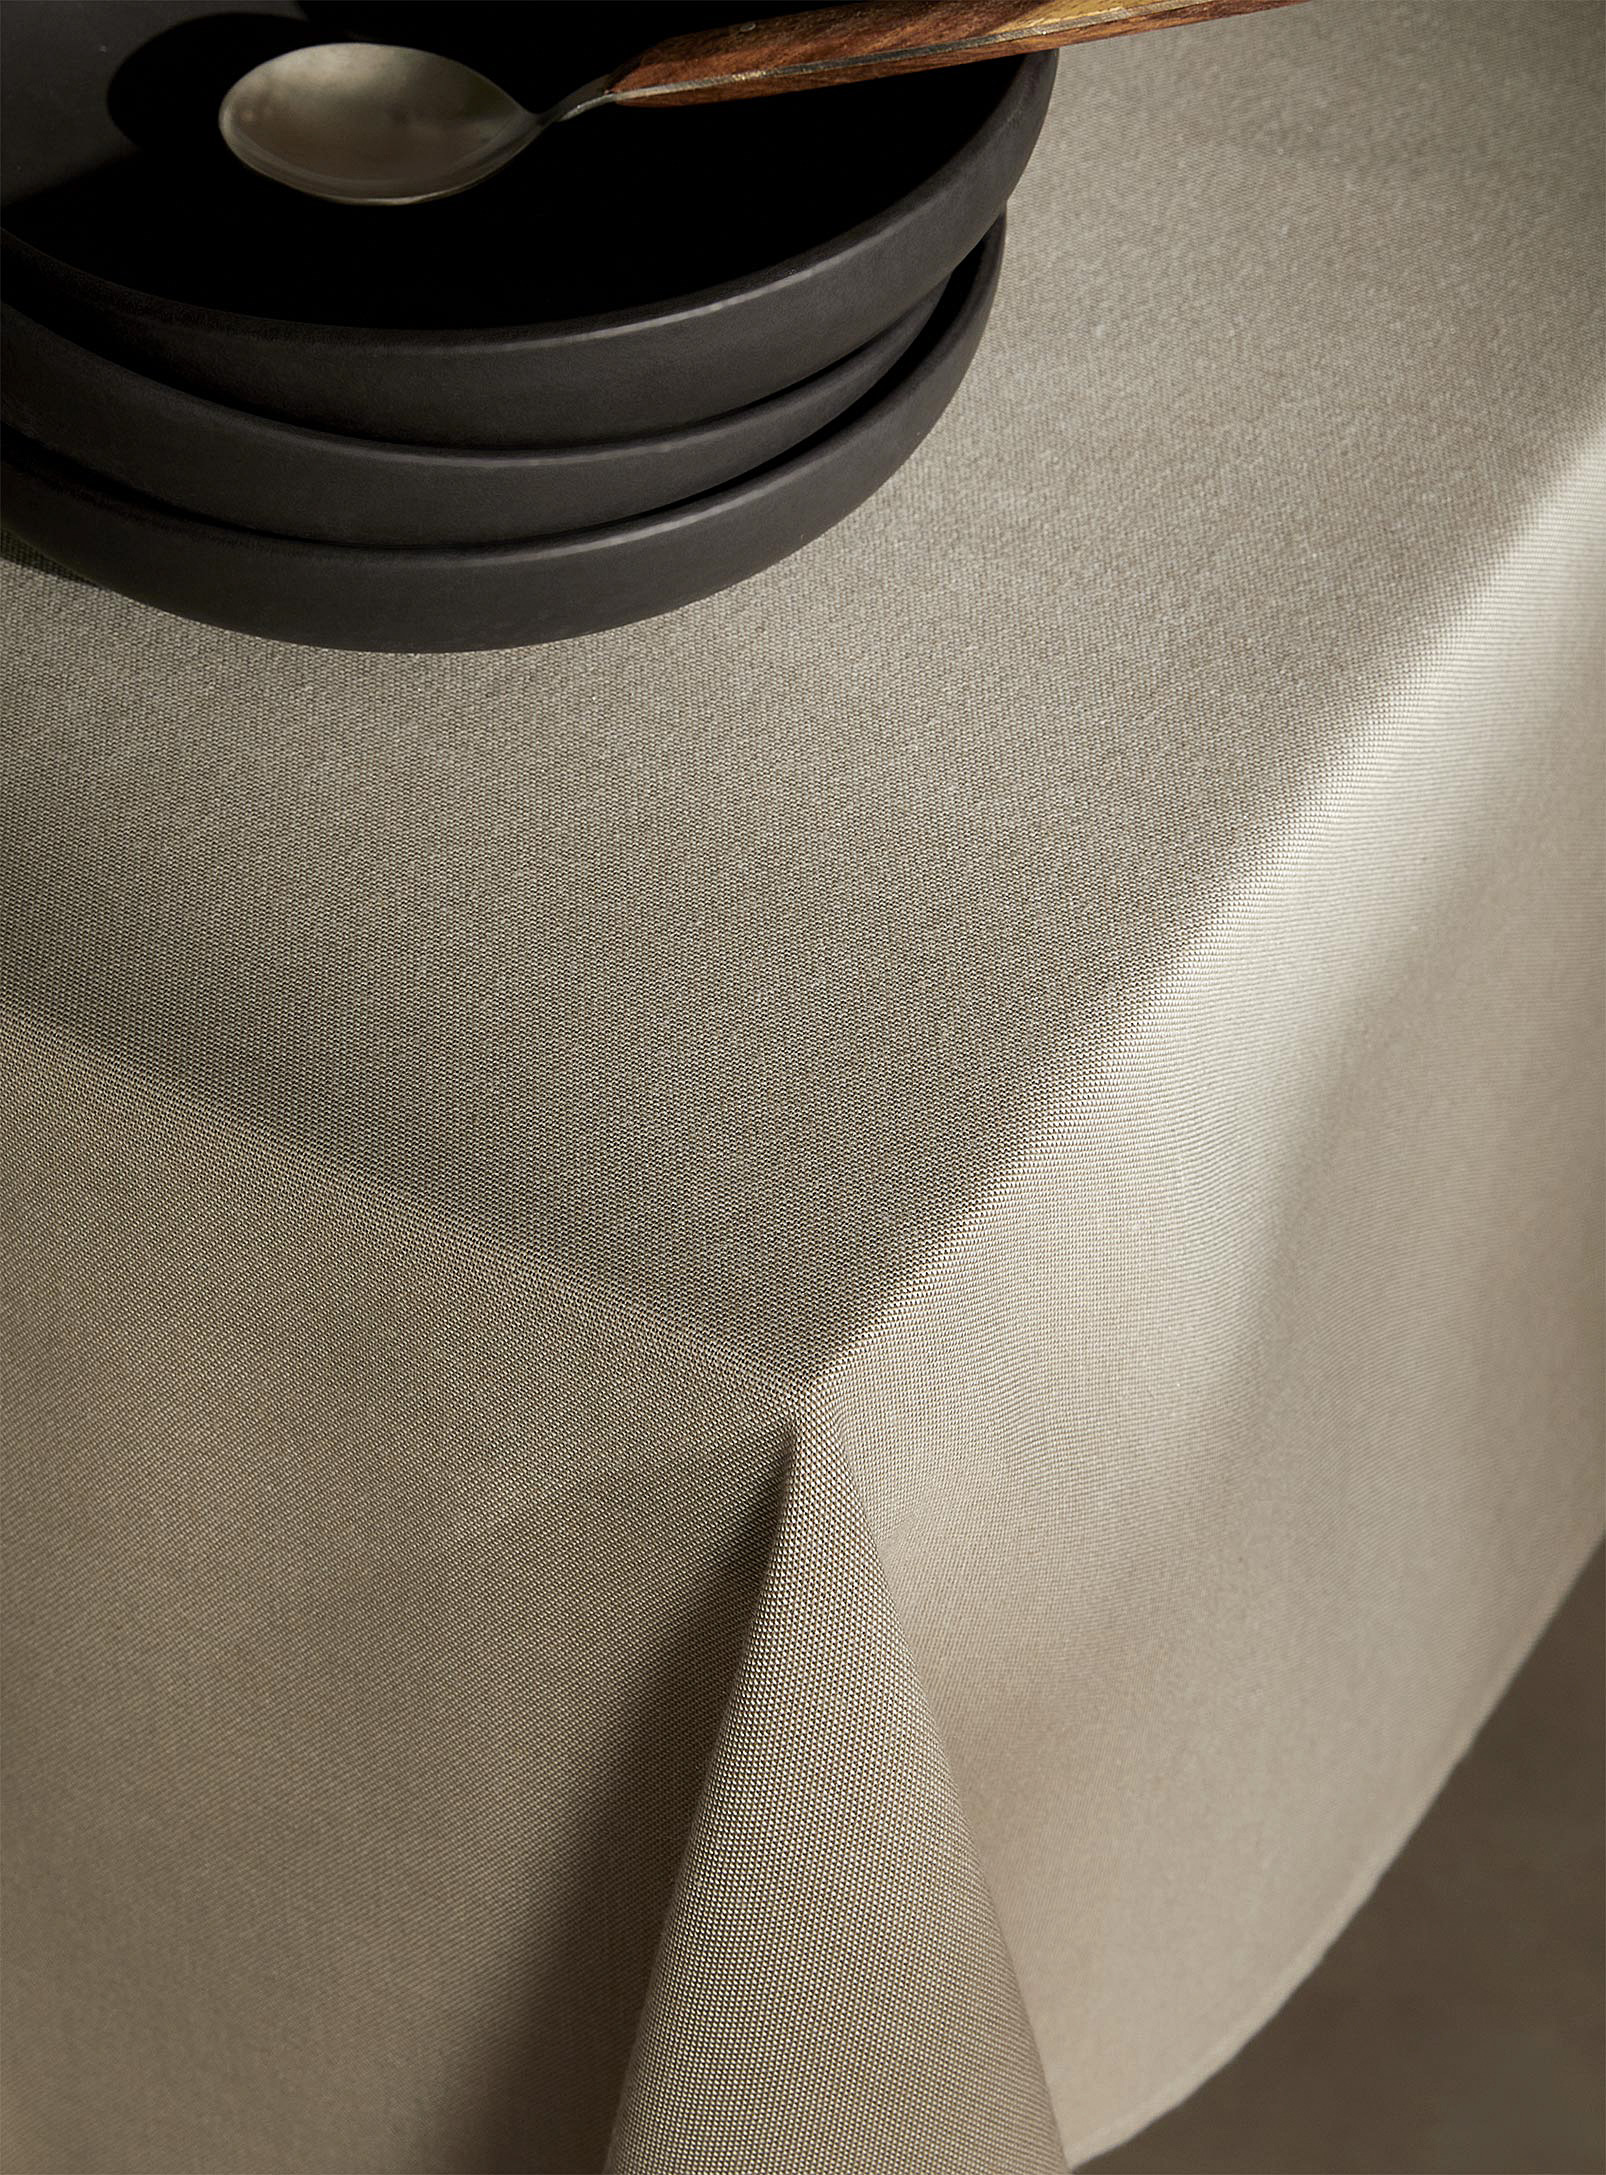 Simons Maison - La nappe chambray sable polyester recyclé